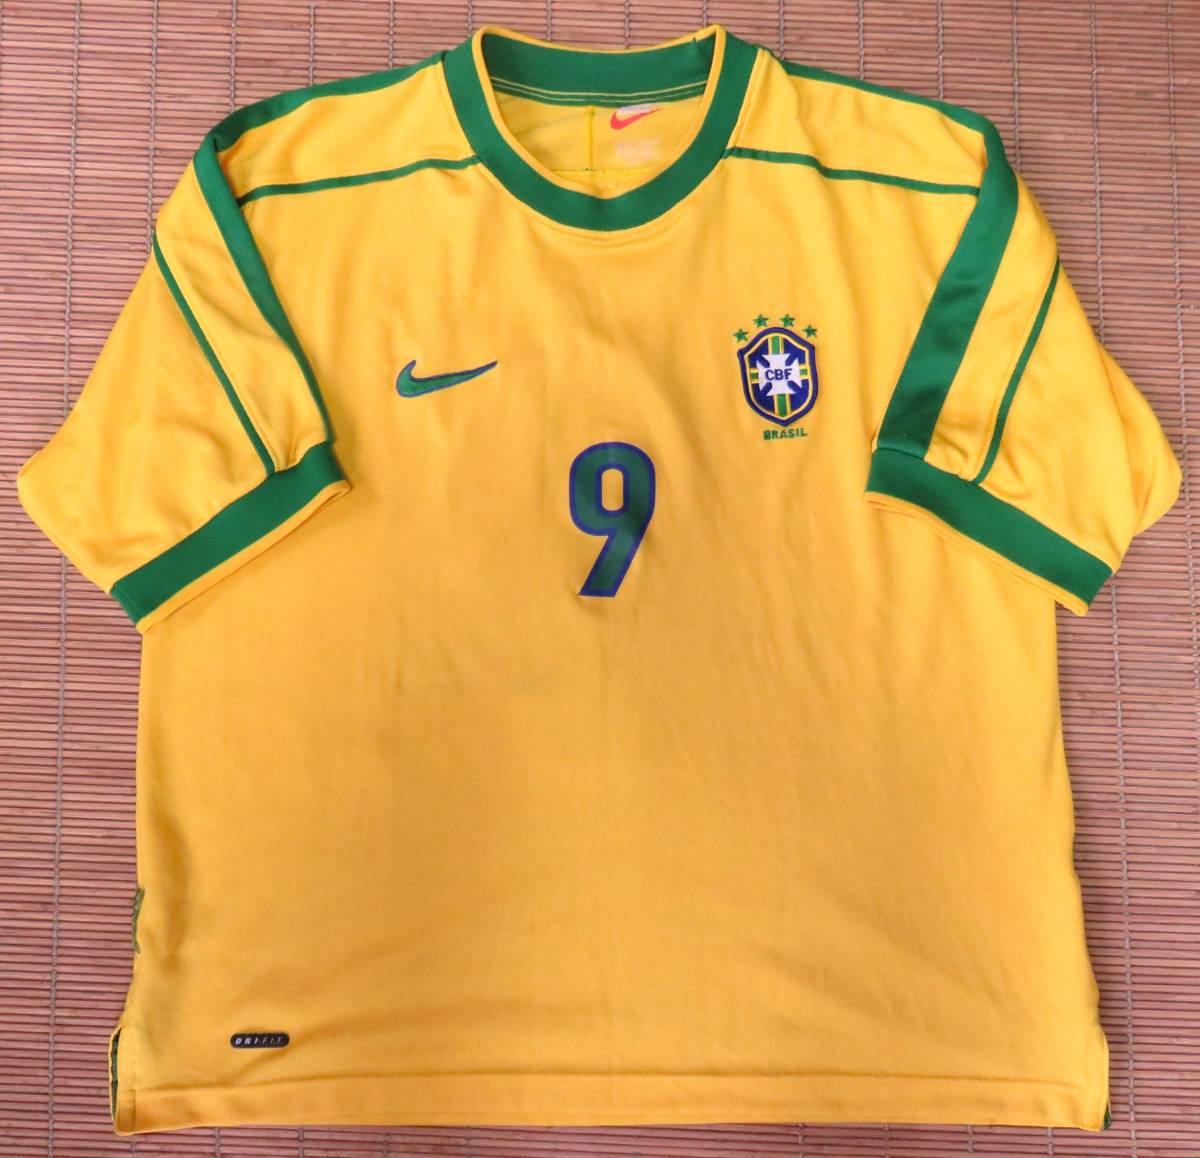 Yahoo!オークション - 正規品 98ワールドカップ 1998-99 ブラジル代表#